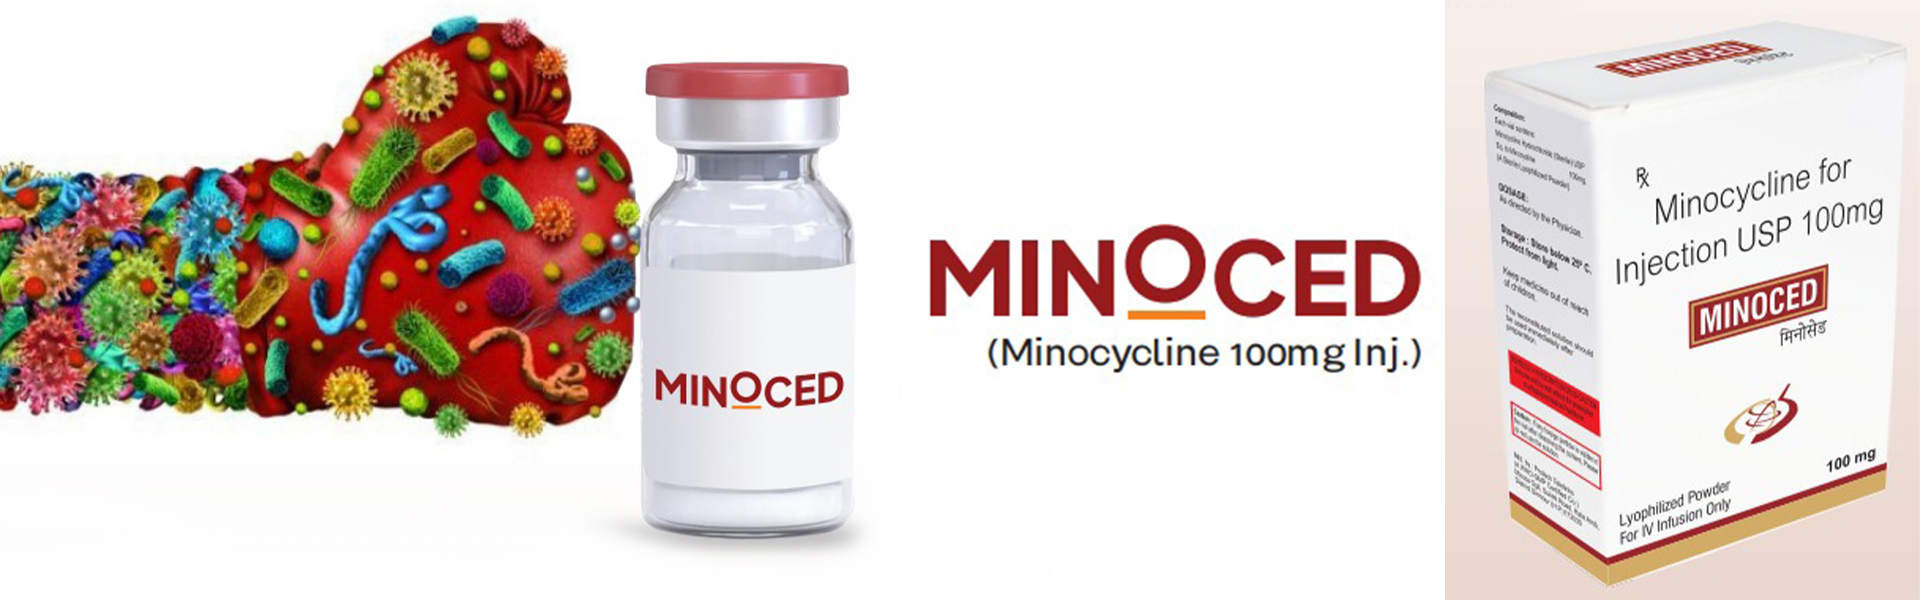 Minoced